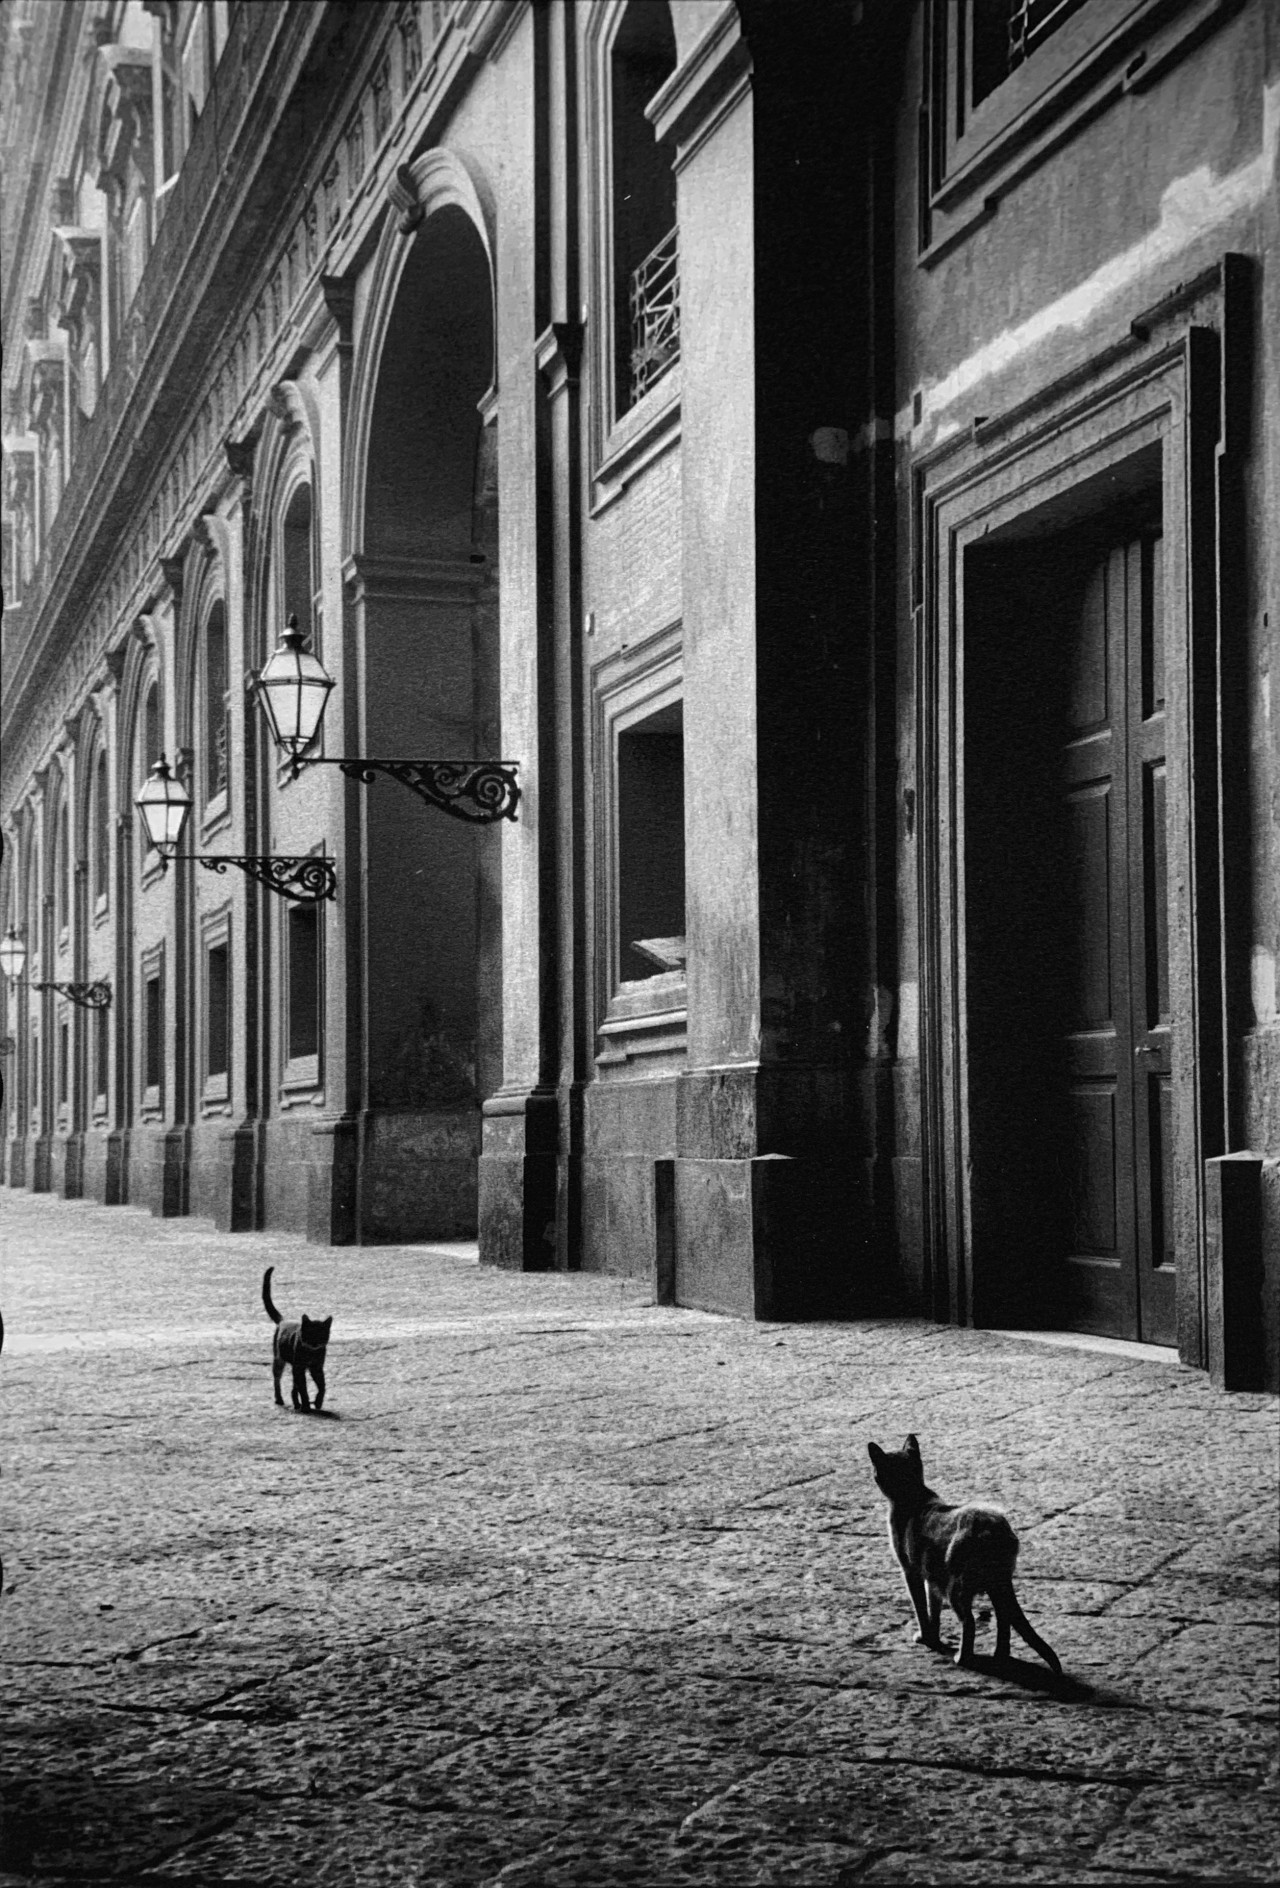 General 1280x1888 architecture building street film grain old photos monochrome cats kittens tiles street light portrait display Leonard Freed Naples Italy